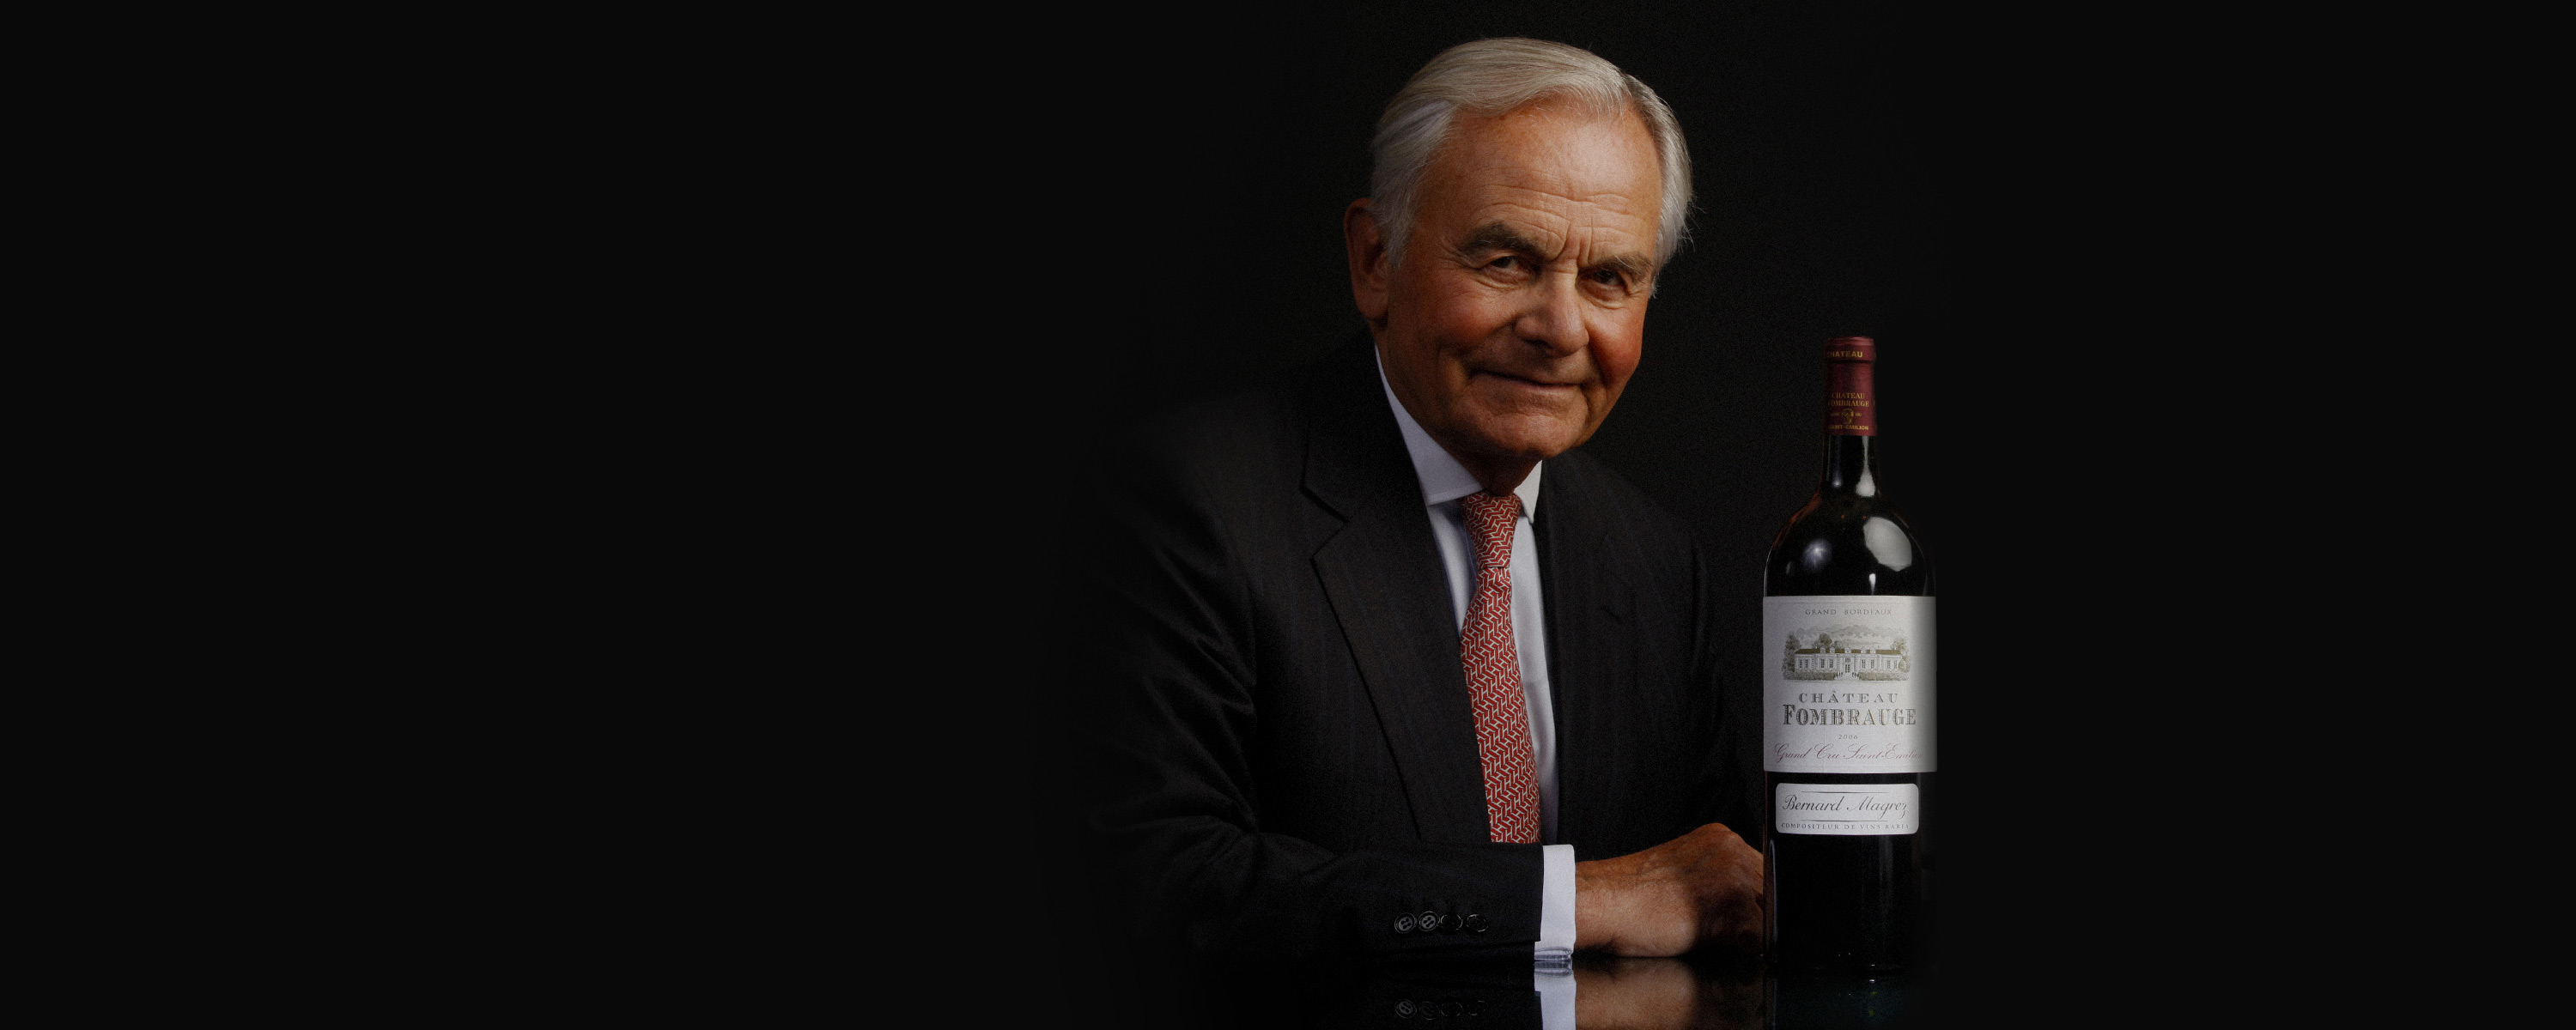 Portrait bernard magrez luxury wine experience © DR